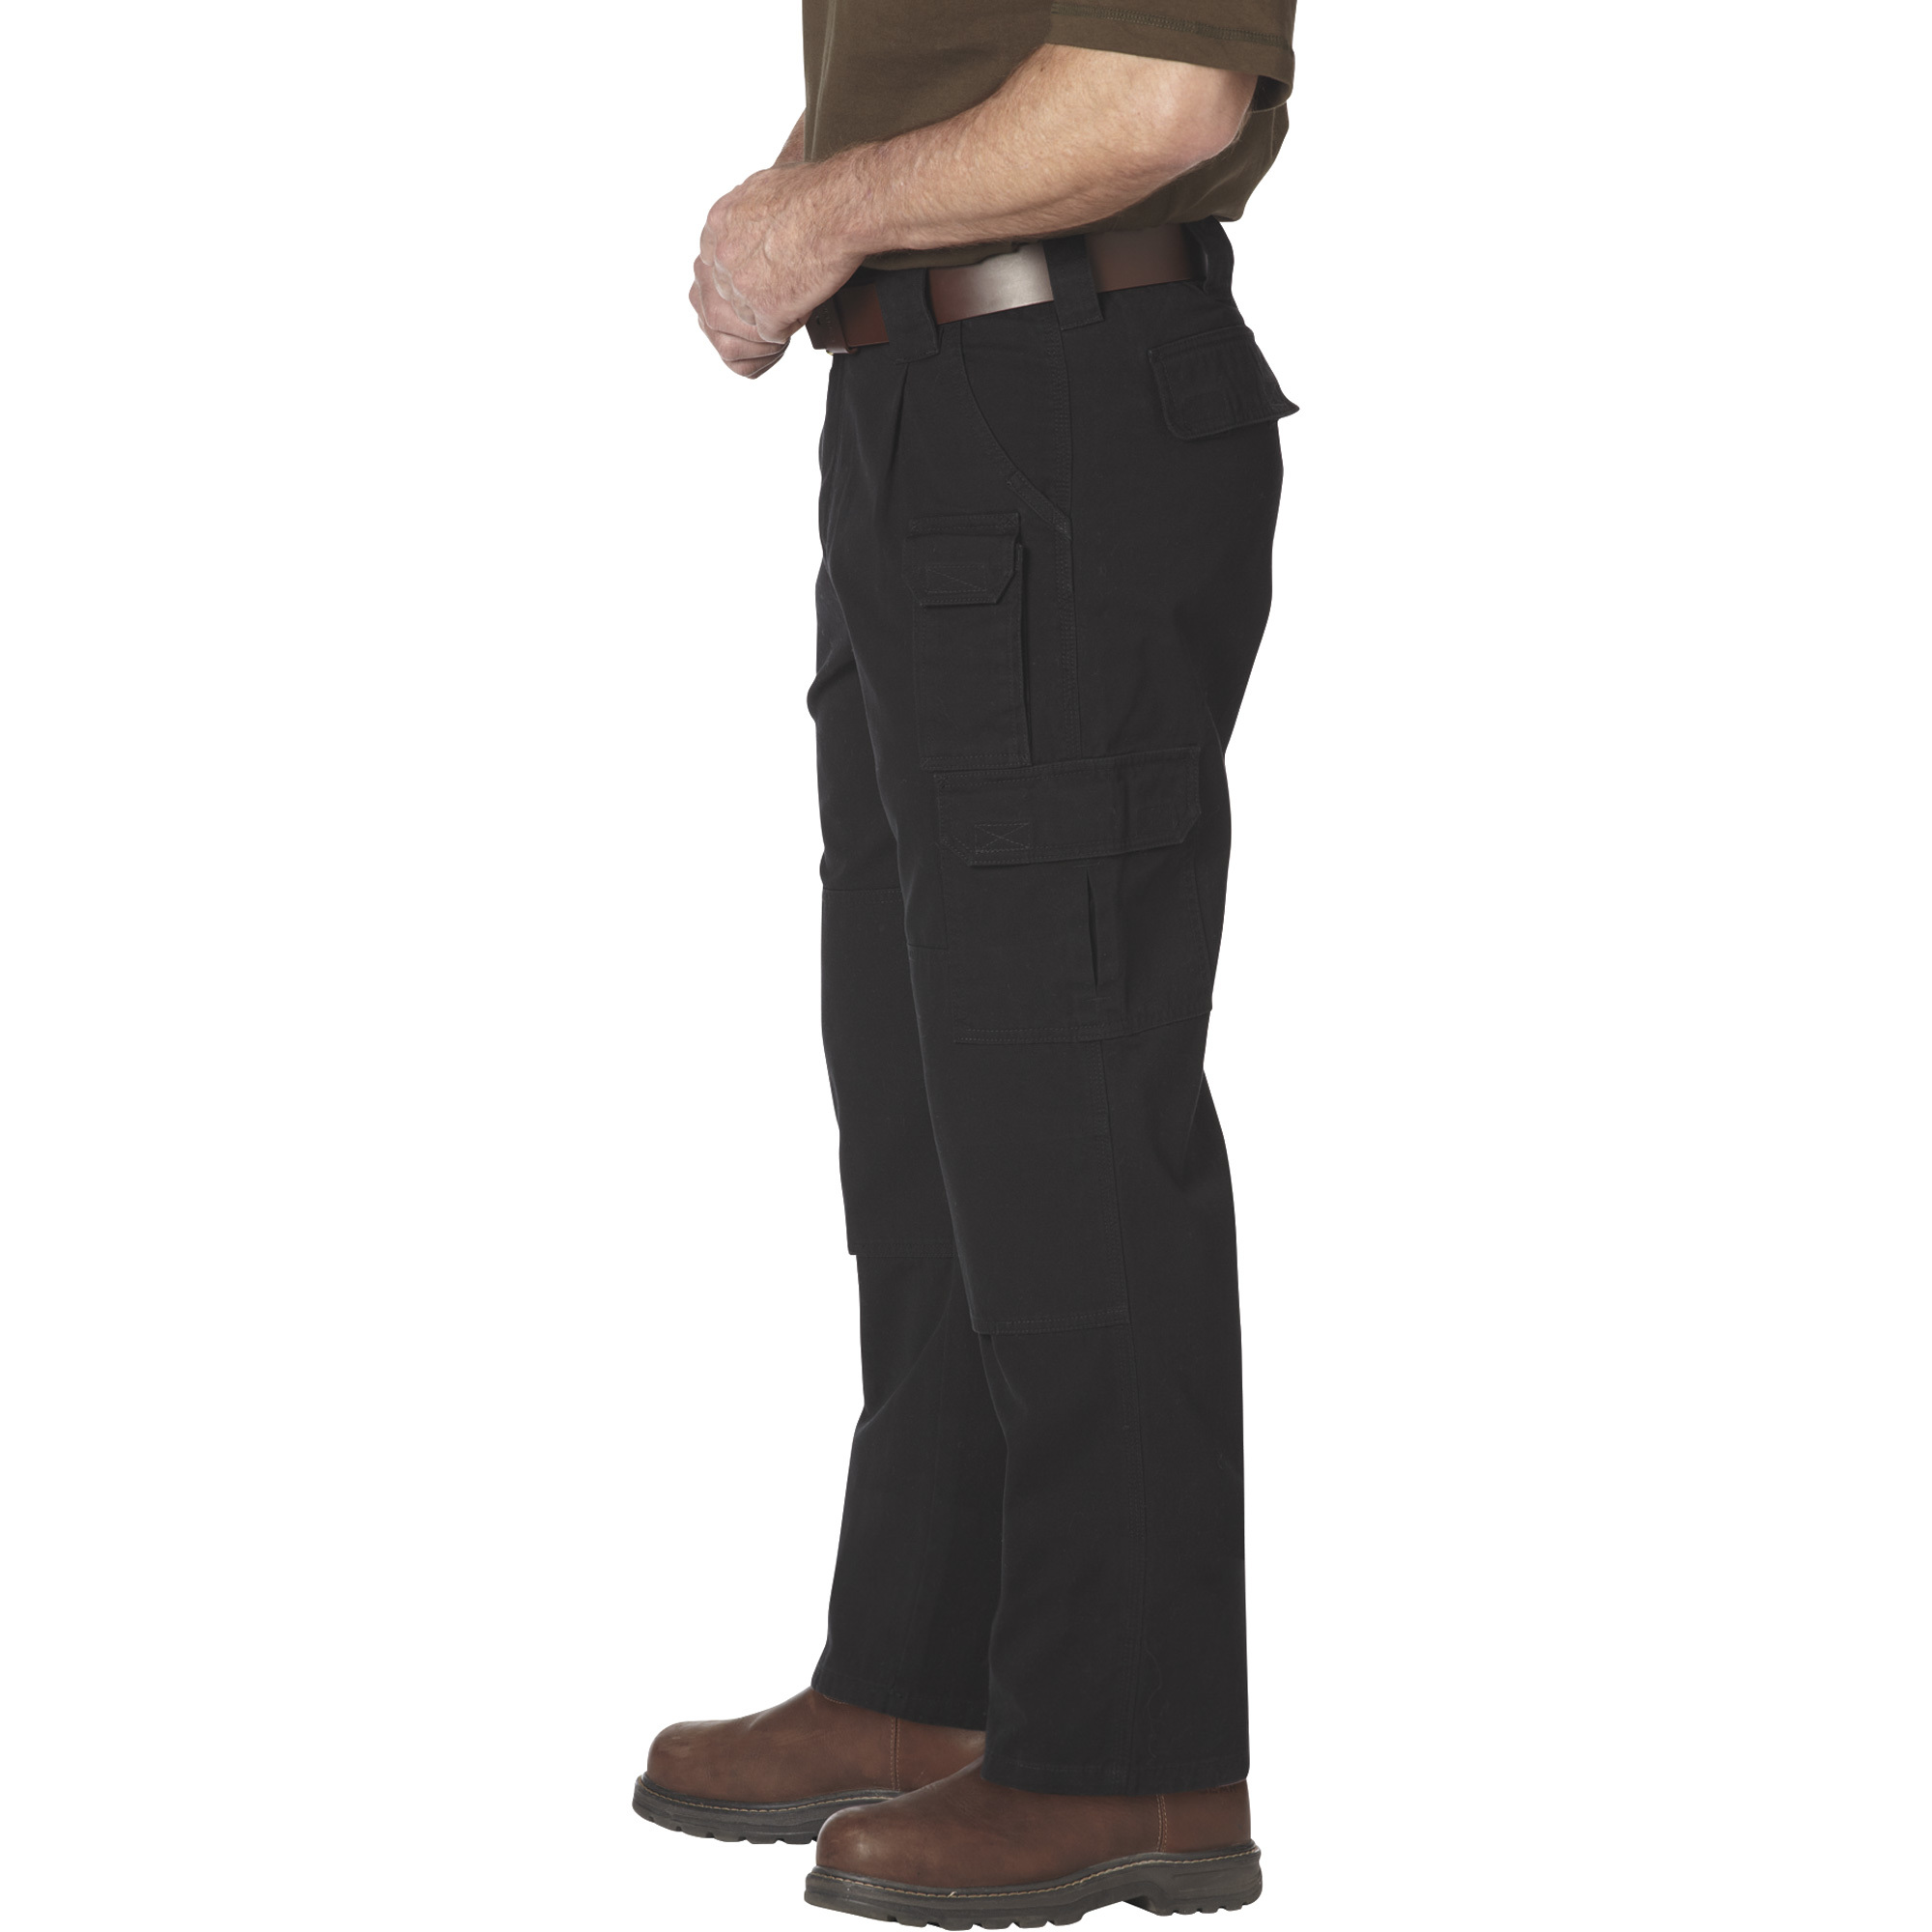 Gravel Gear Men's 7-Pocket Tactical Pants with Teflon - Black, 38Inch Waist x 32Inch Inseam